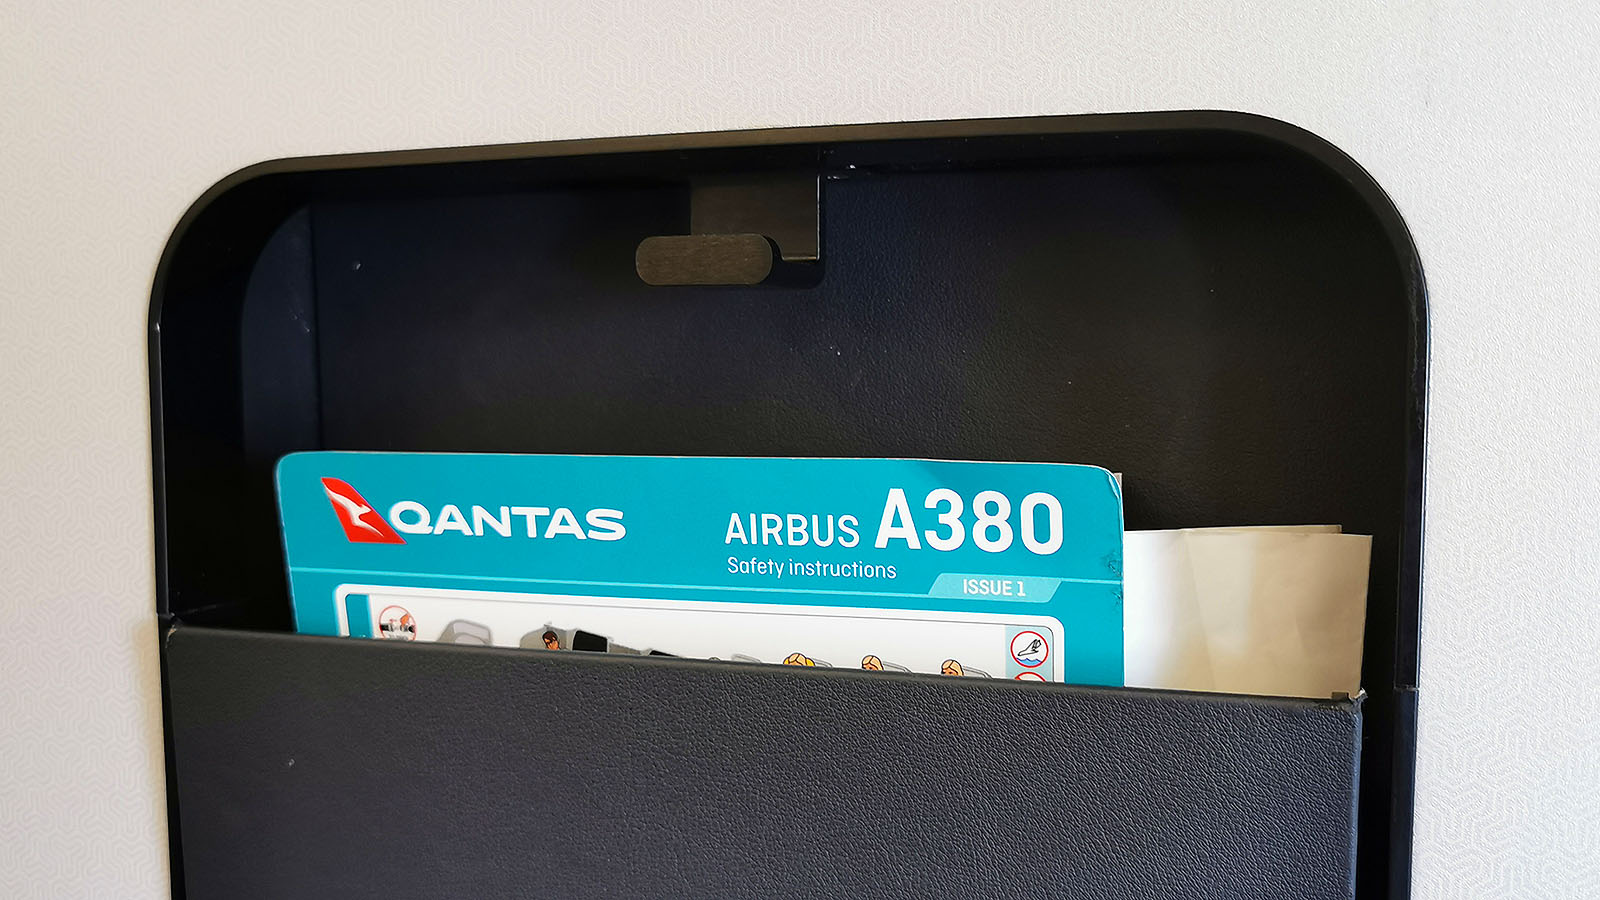 Qantas Airbus A380 Business literature pocket